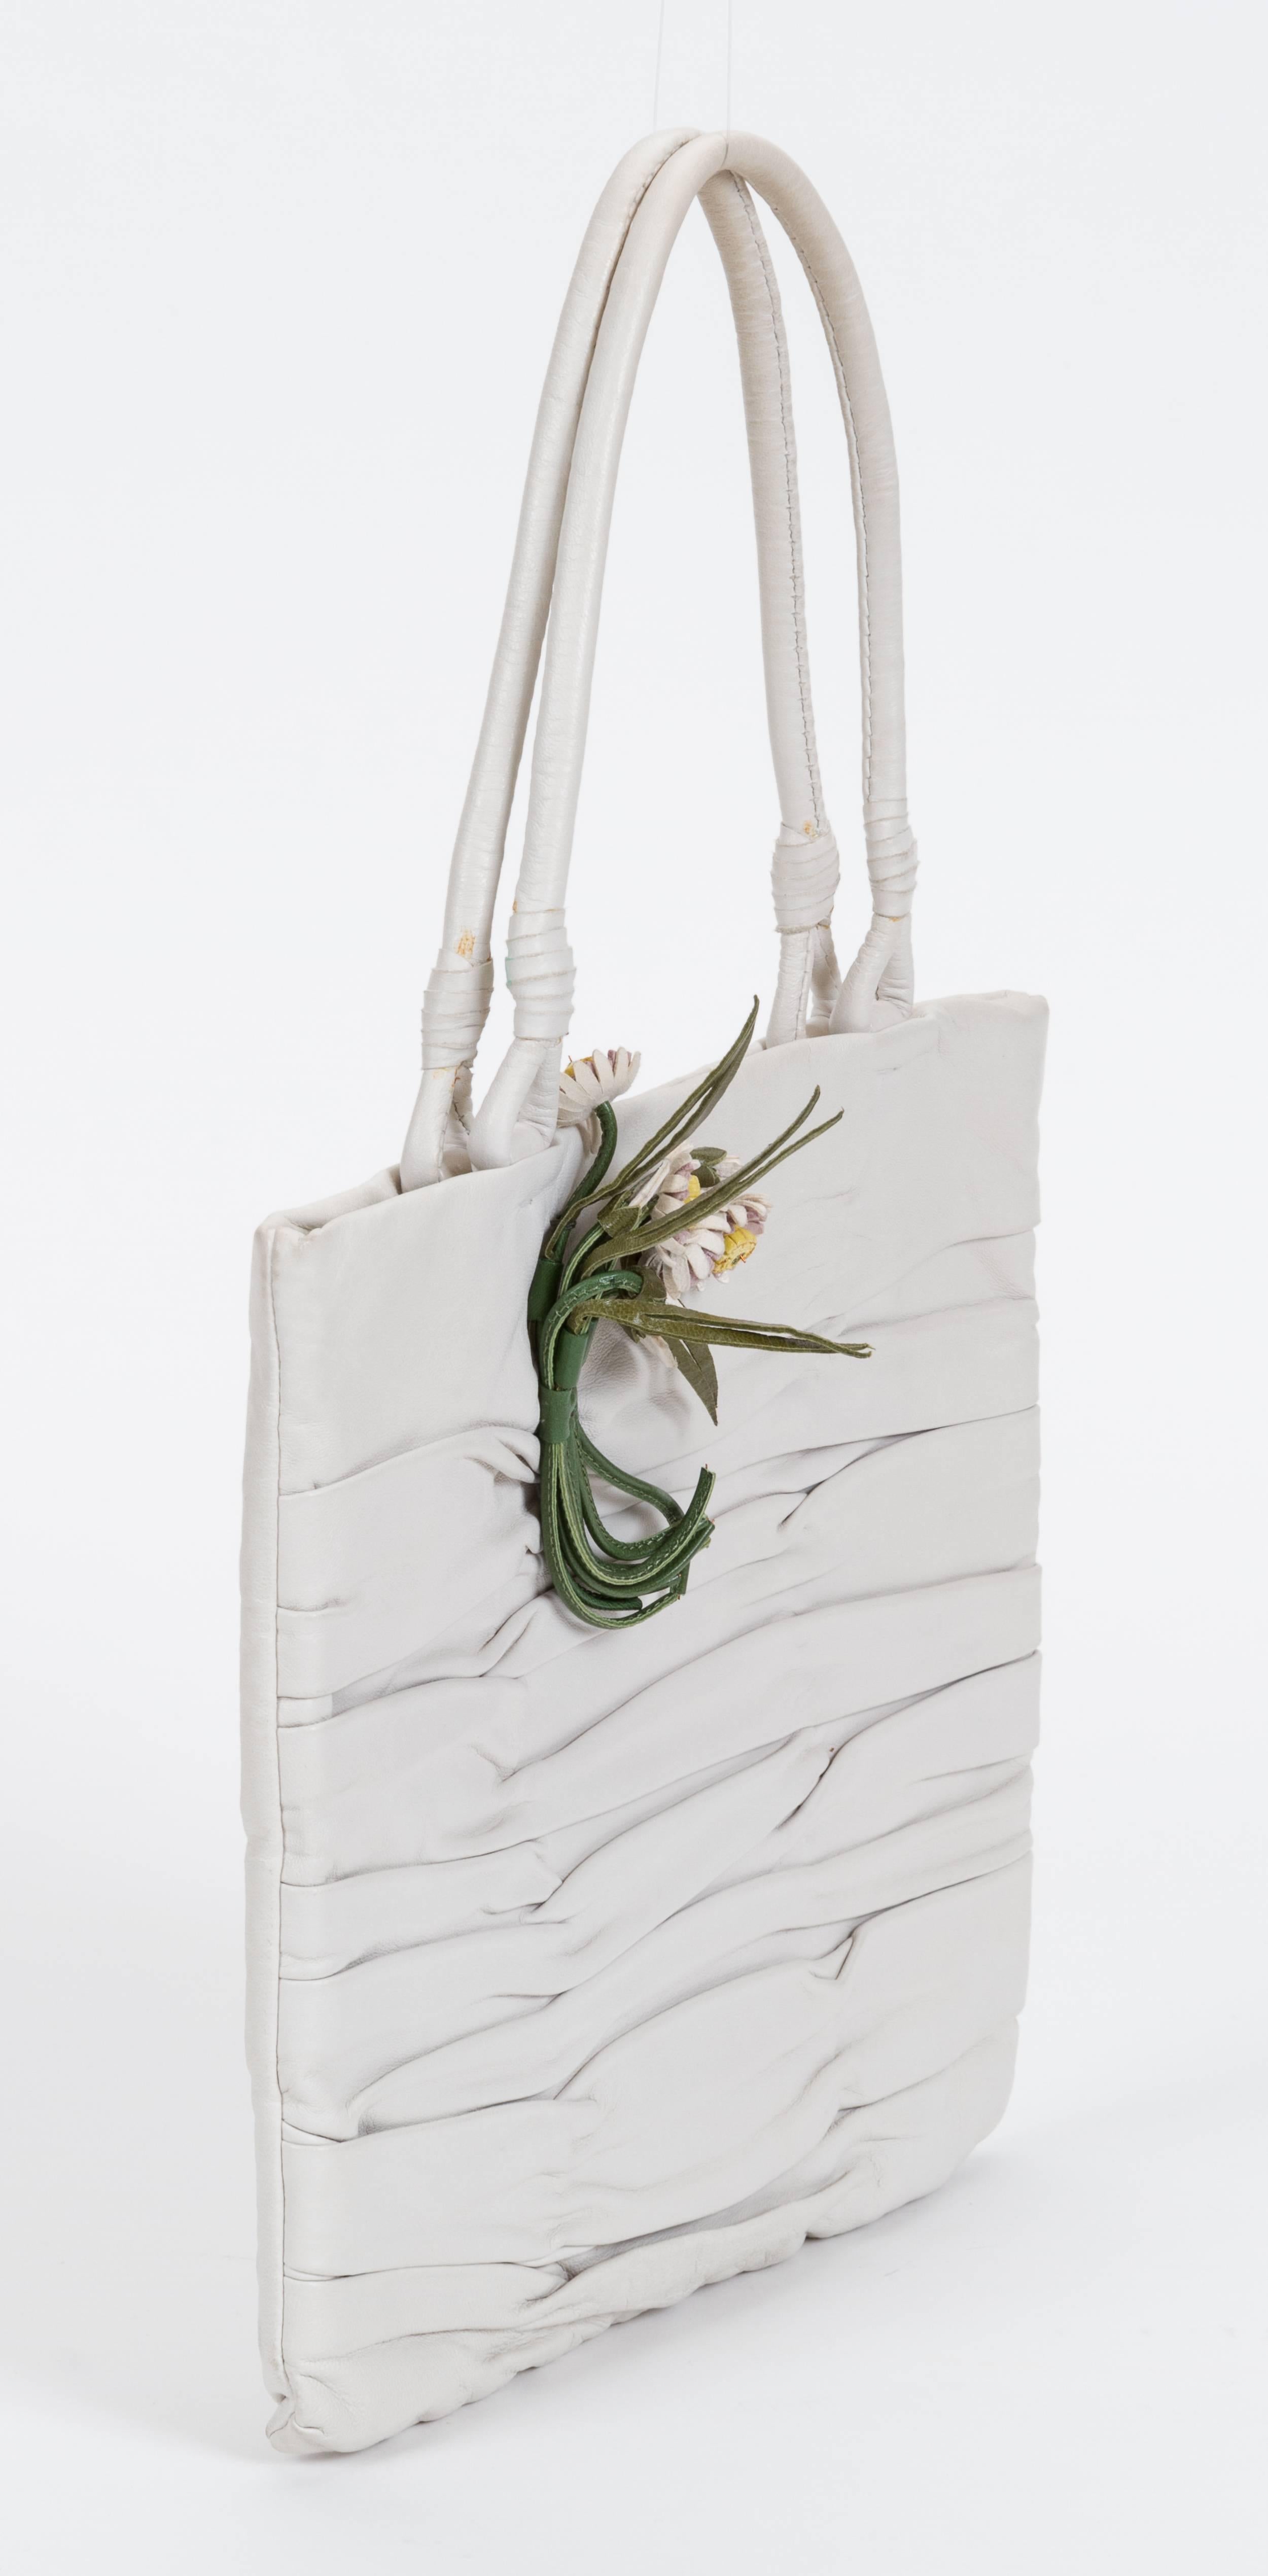 Prada 90s vintage white lambskin handbag with flower detail. Green silk interior. One minor stain on back of the bag. Handle drop 5.5